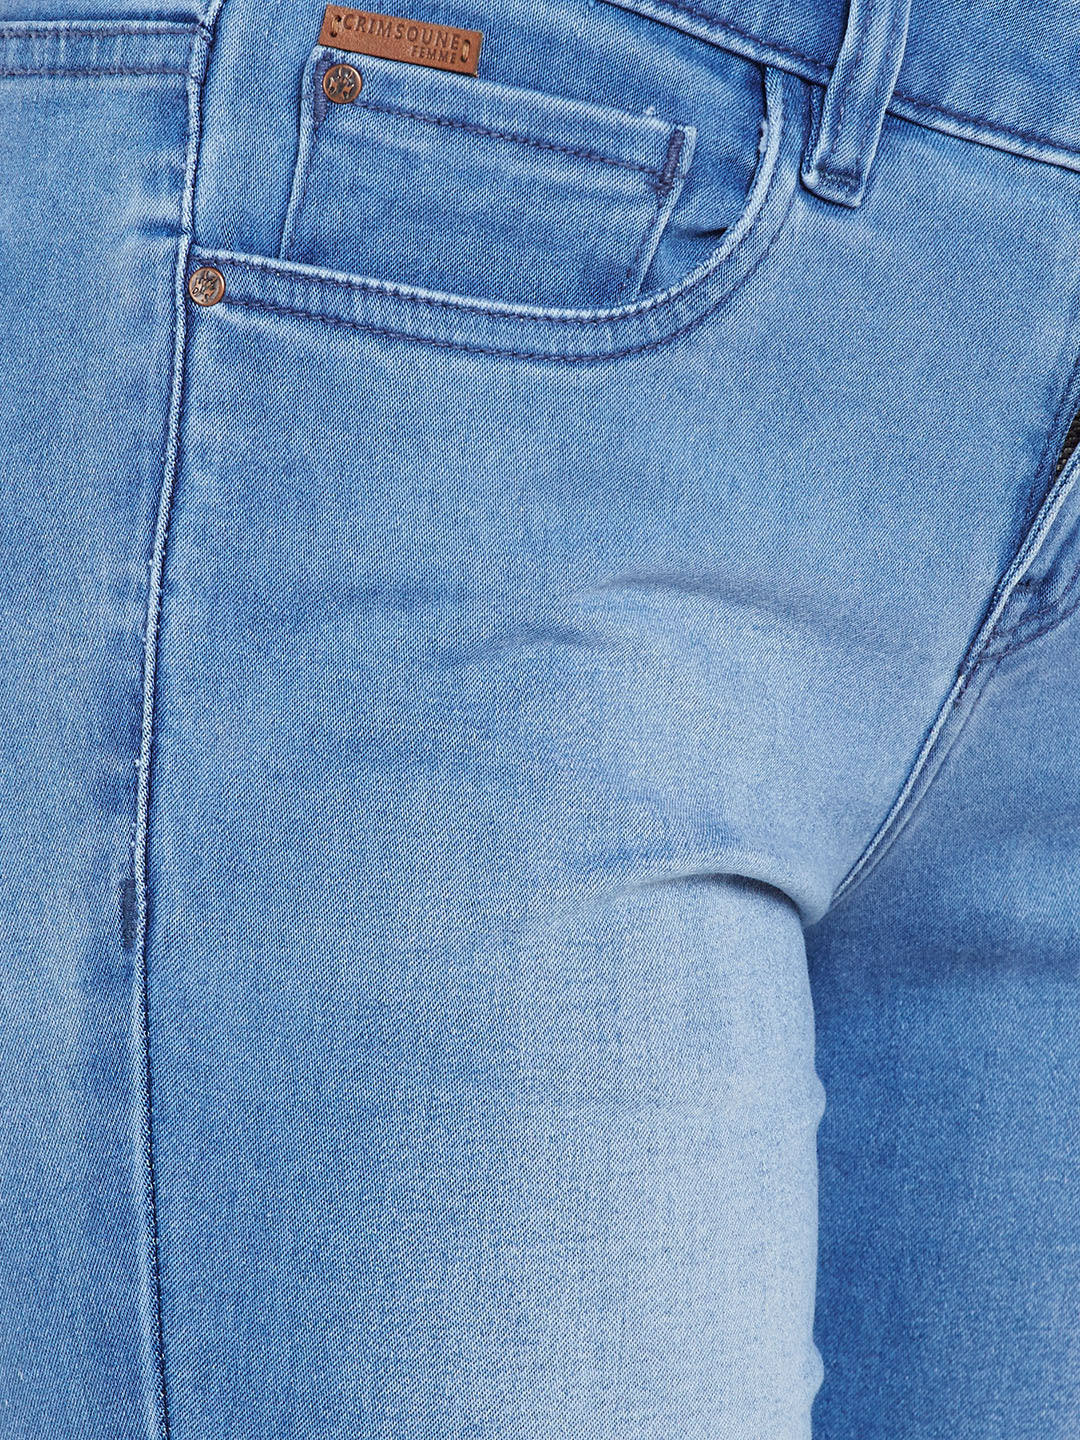 Classic Blue Denim - Women Jeans